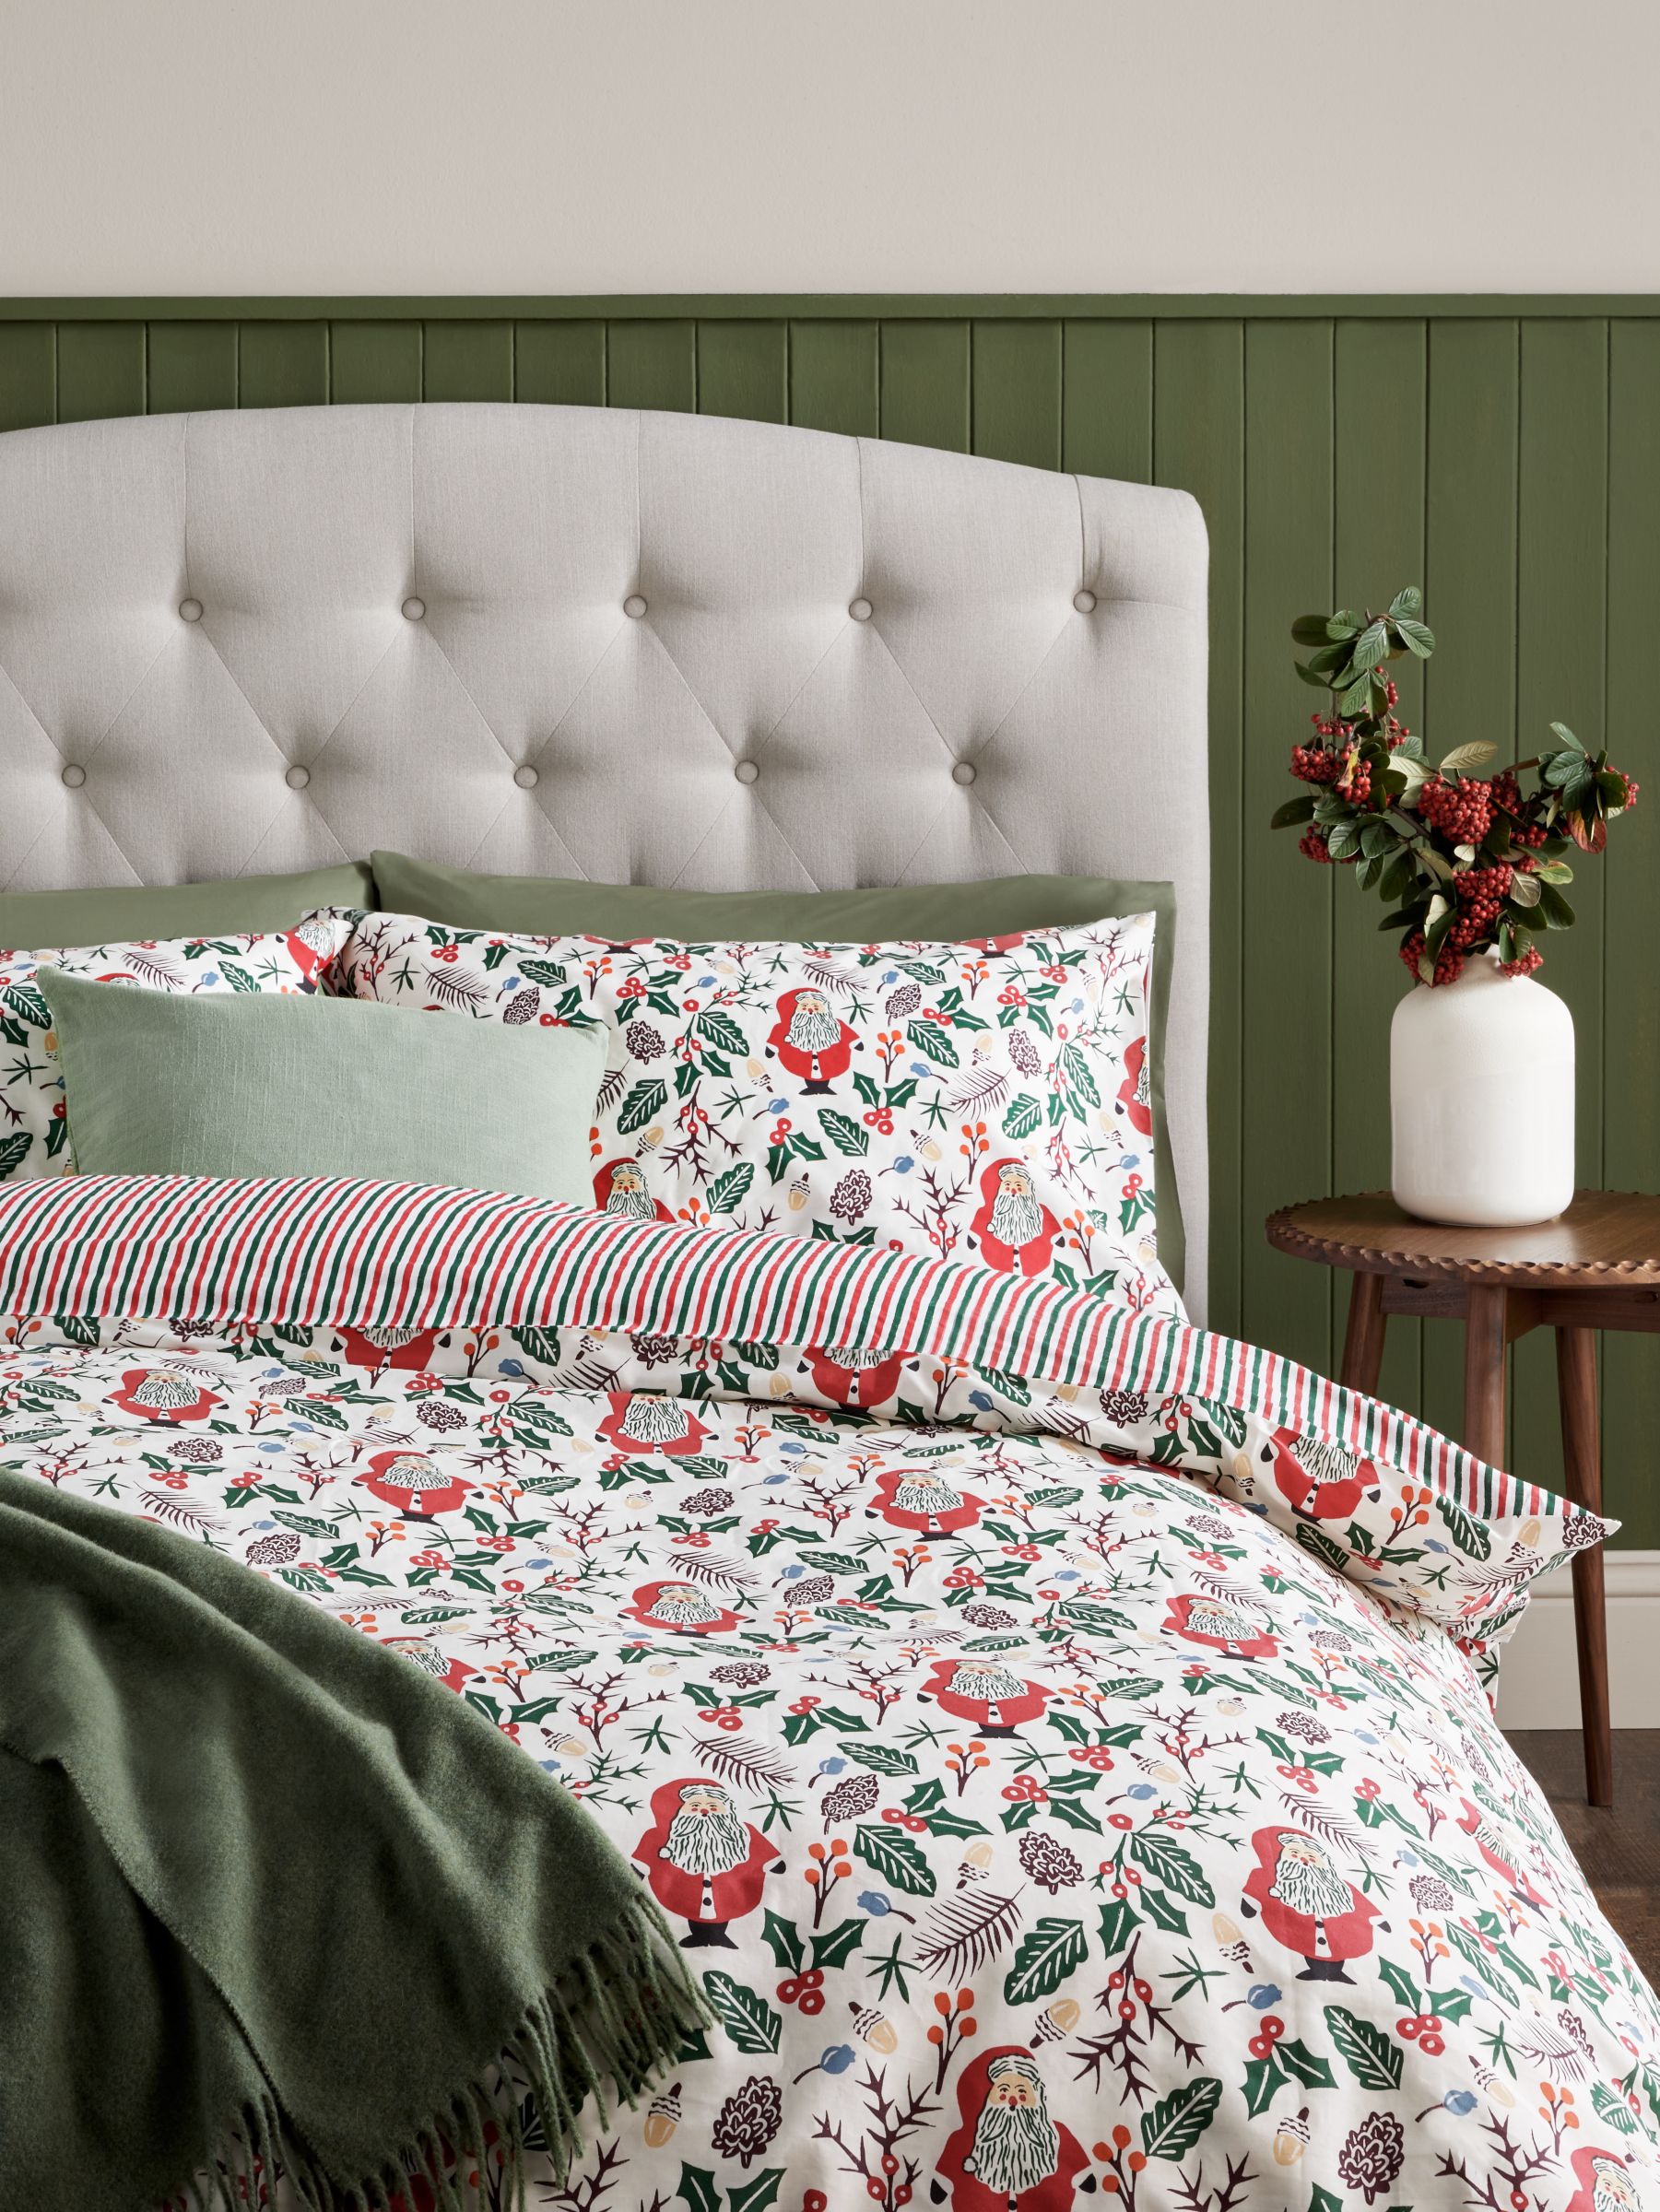 SALE] Lv Bedding Sets Duvet Cover Bedroom Luxury Brand - Luxury & Sports  Store